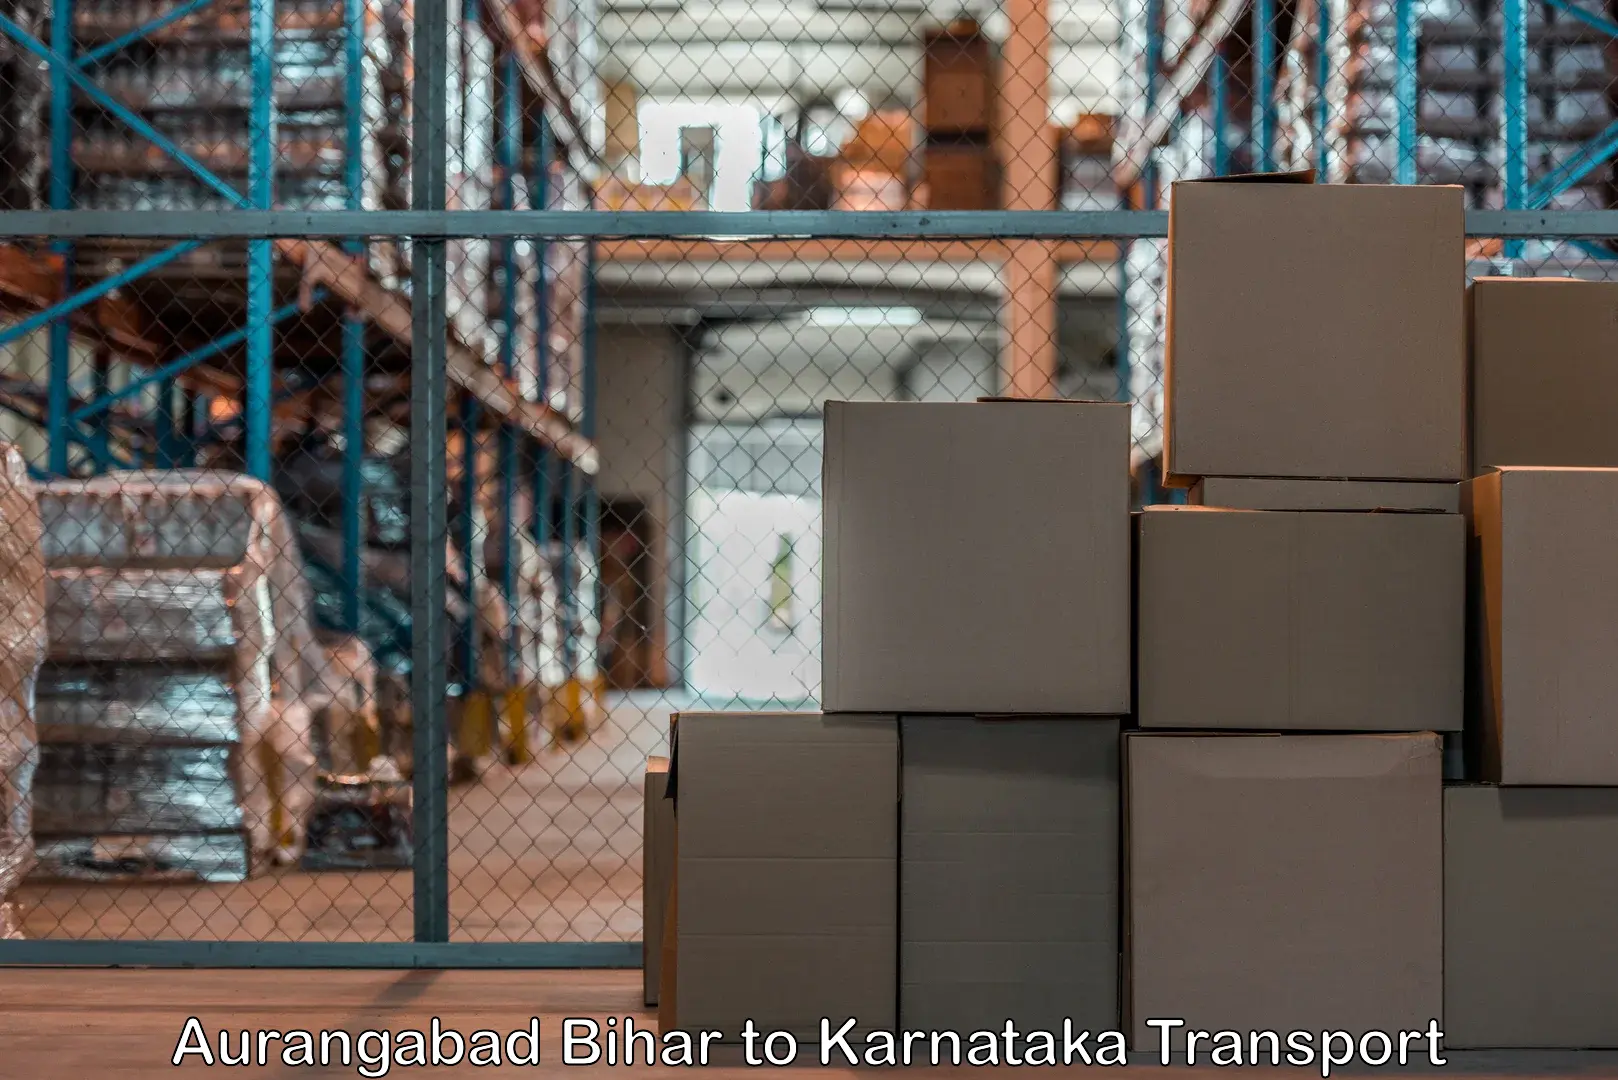 Daily parcel service transport in Aurangabad Bihar to Hangal